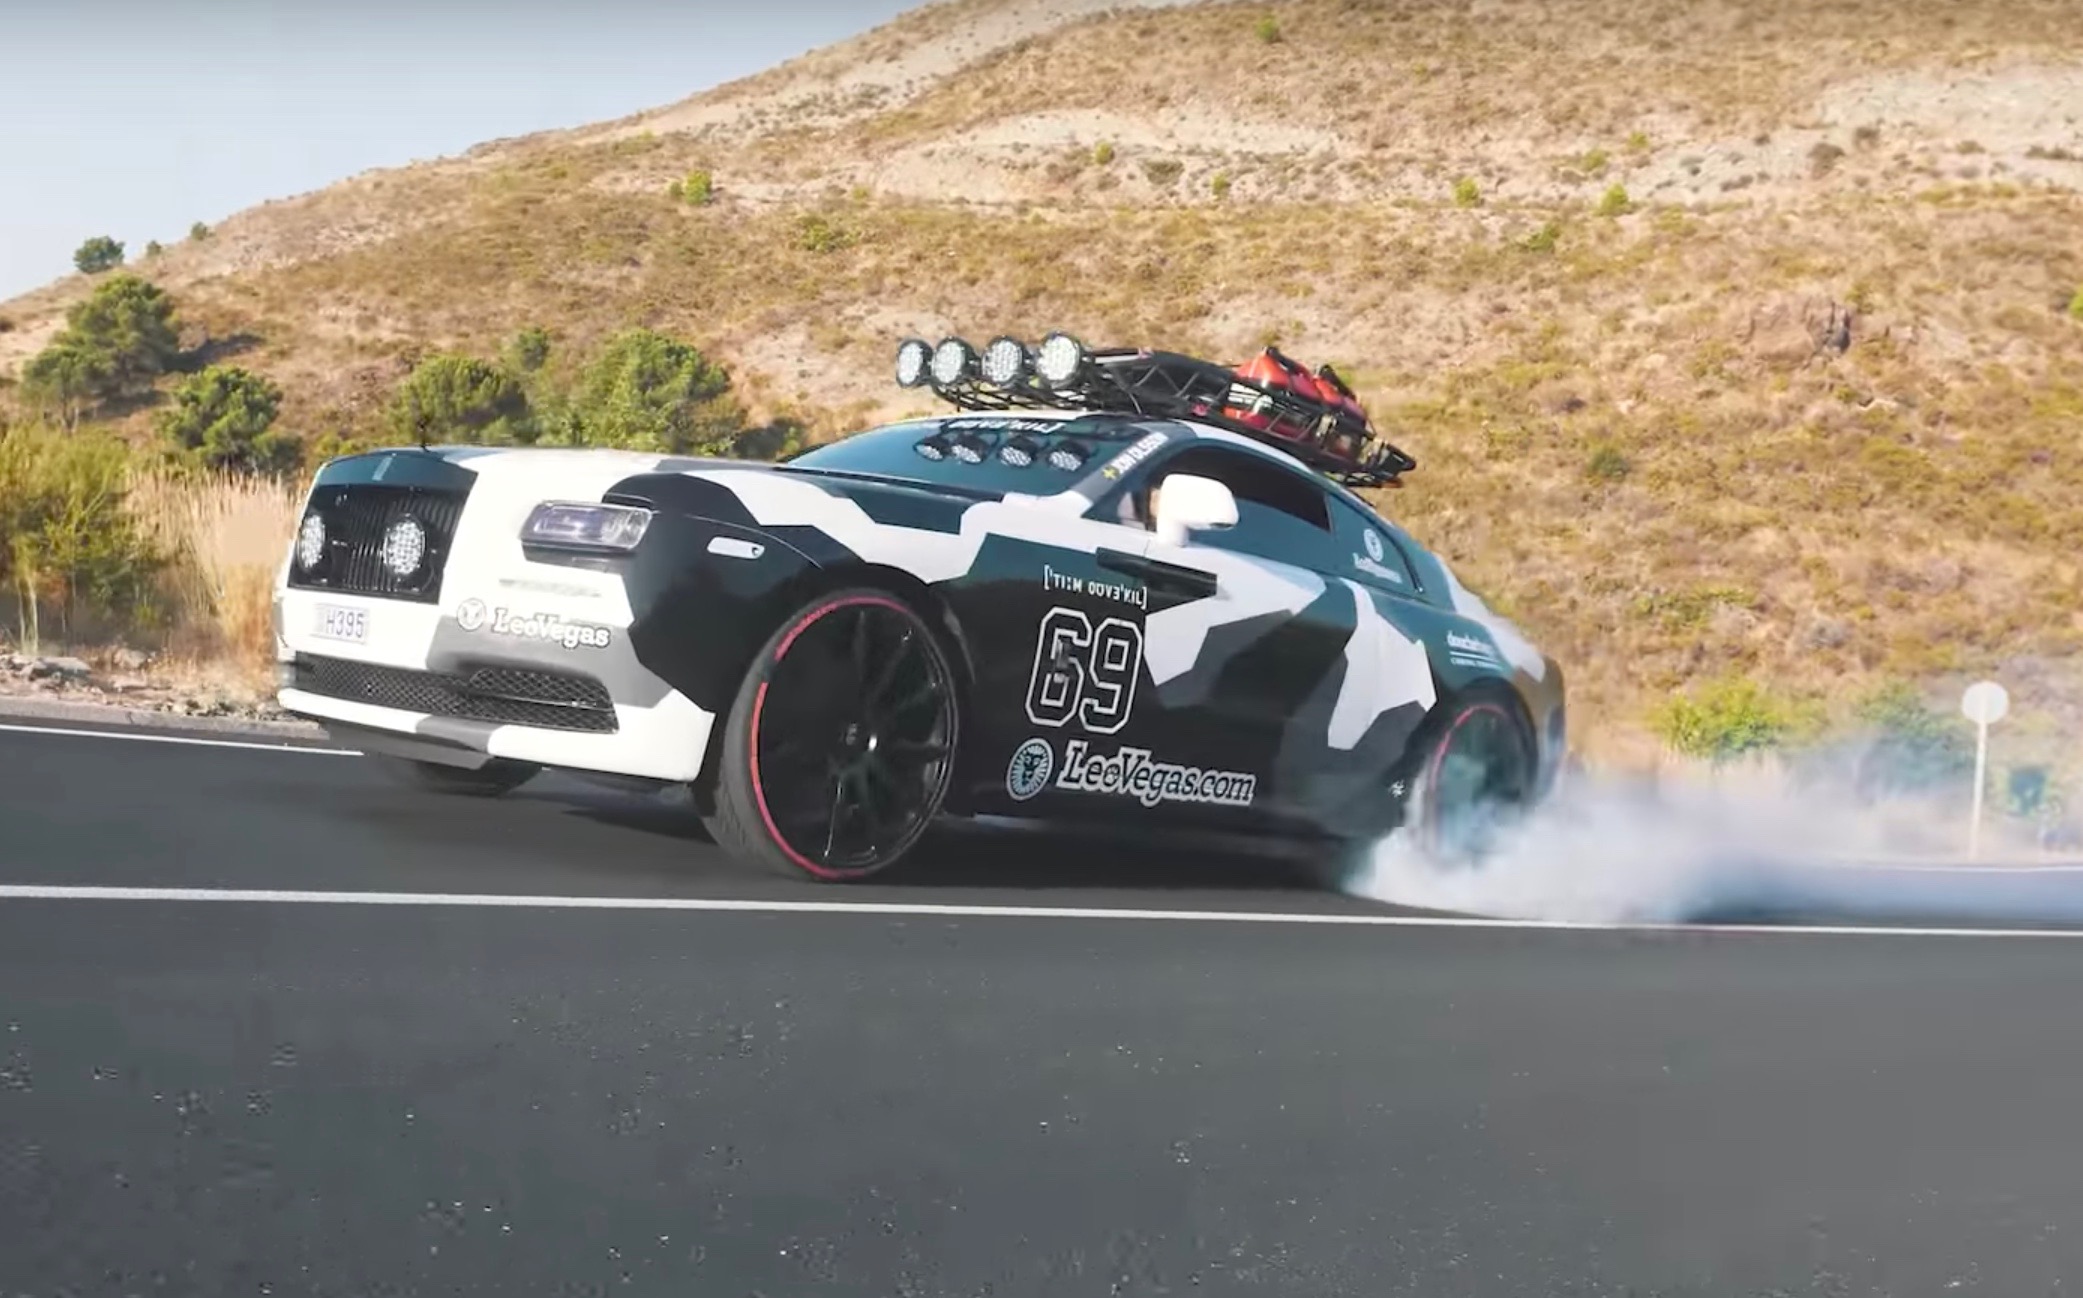 Jon Olsson shows off his epic Rolls-Royce Wraith (video)